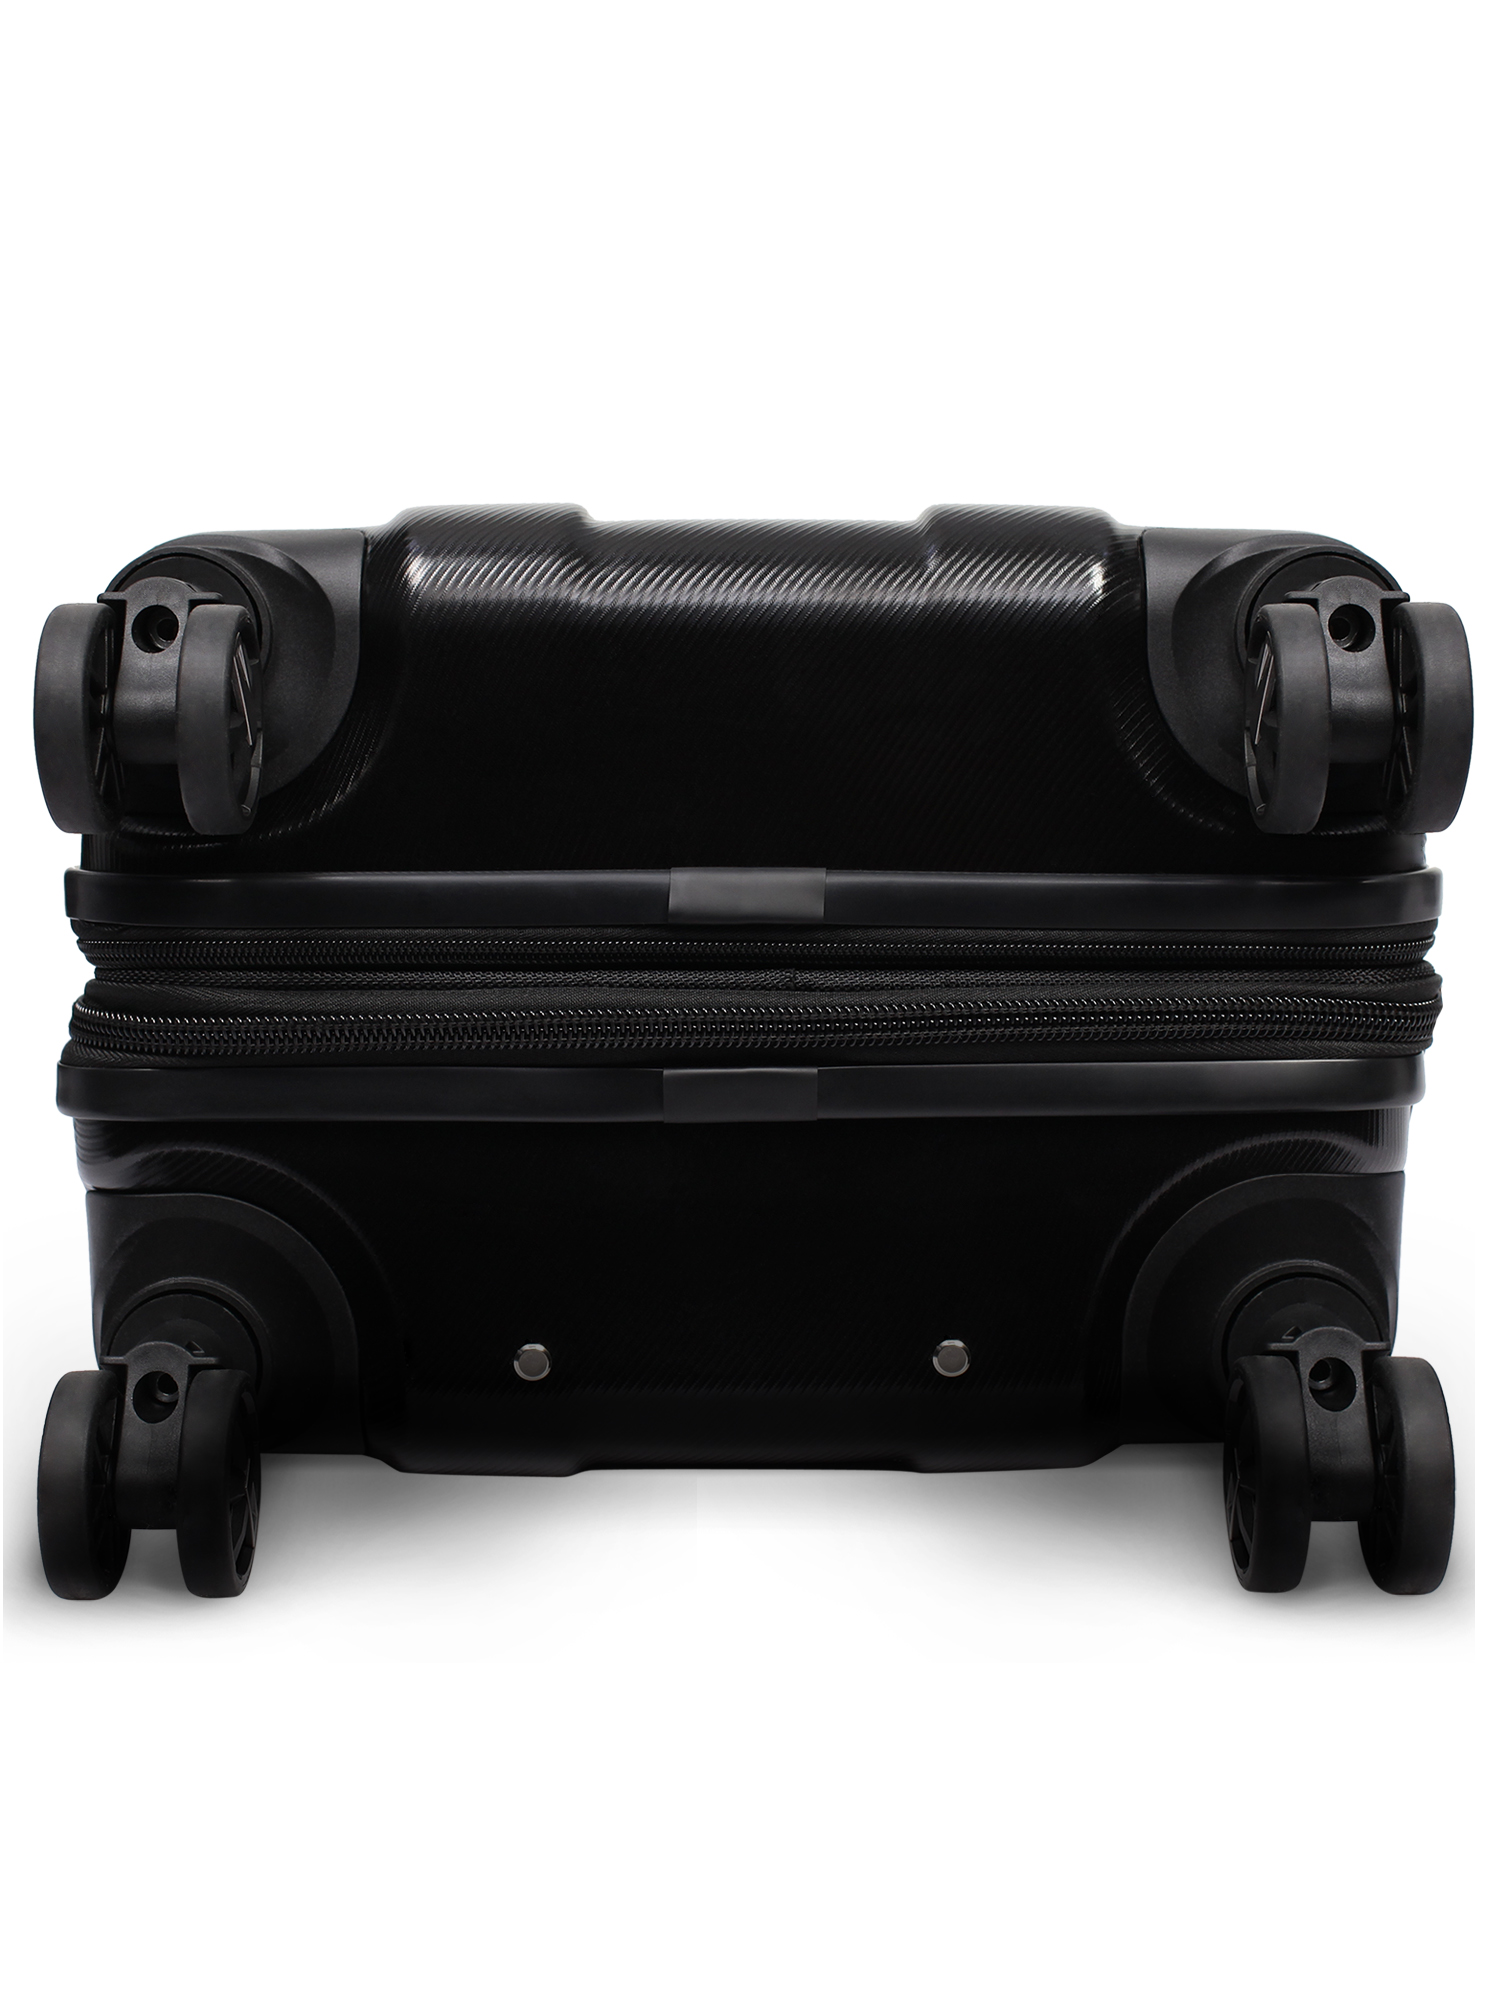 SwissTech 2 Piece Luggage Set, 29" Executive and Navigation 21", Black - image 5 of 15